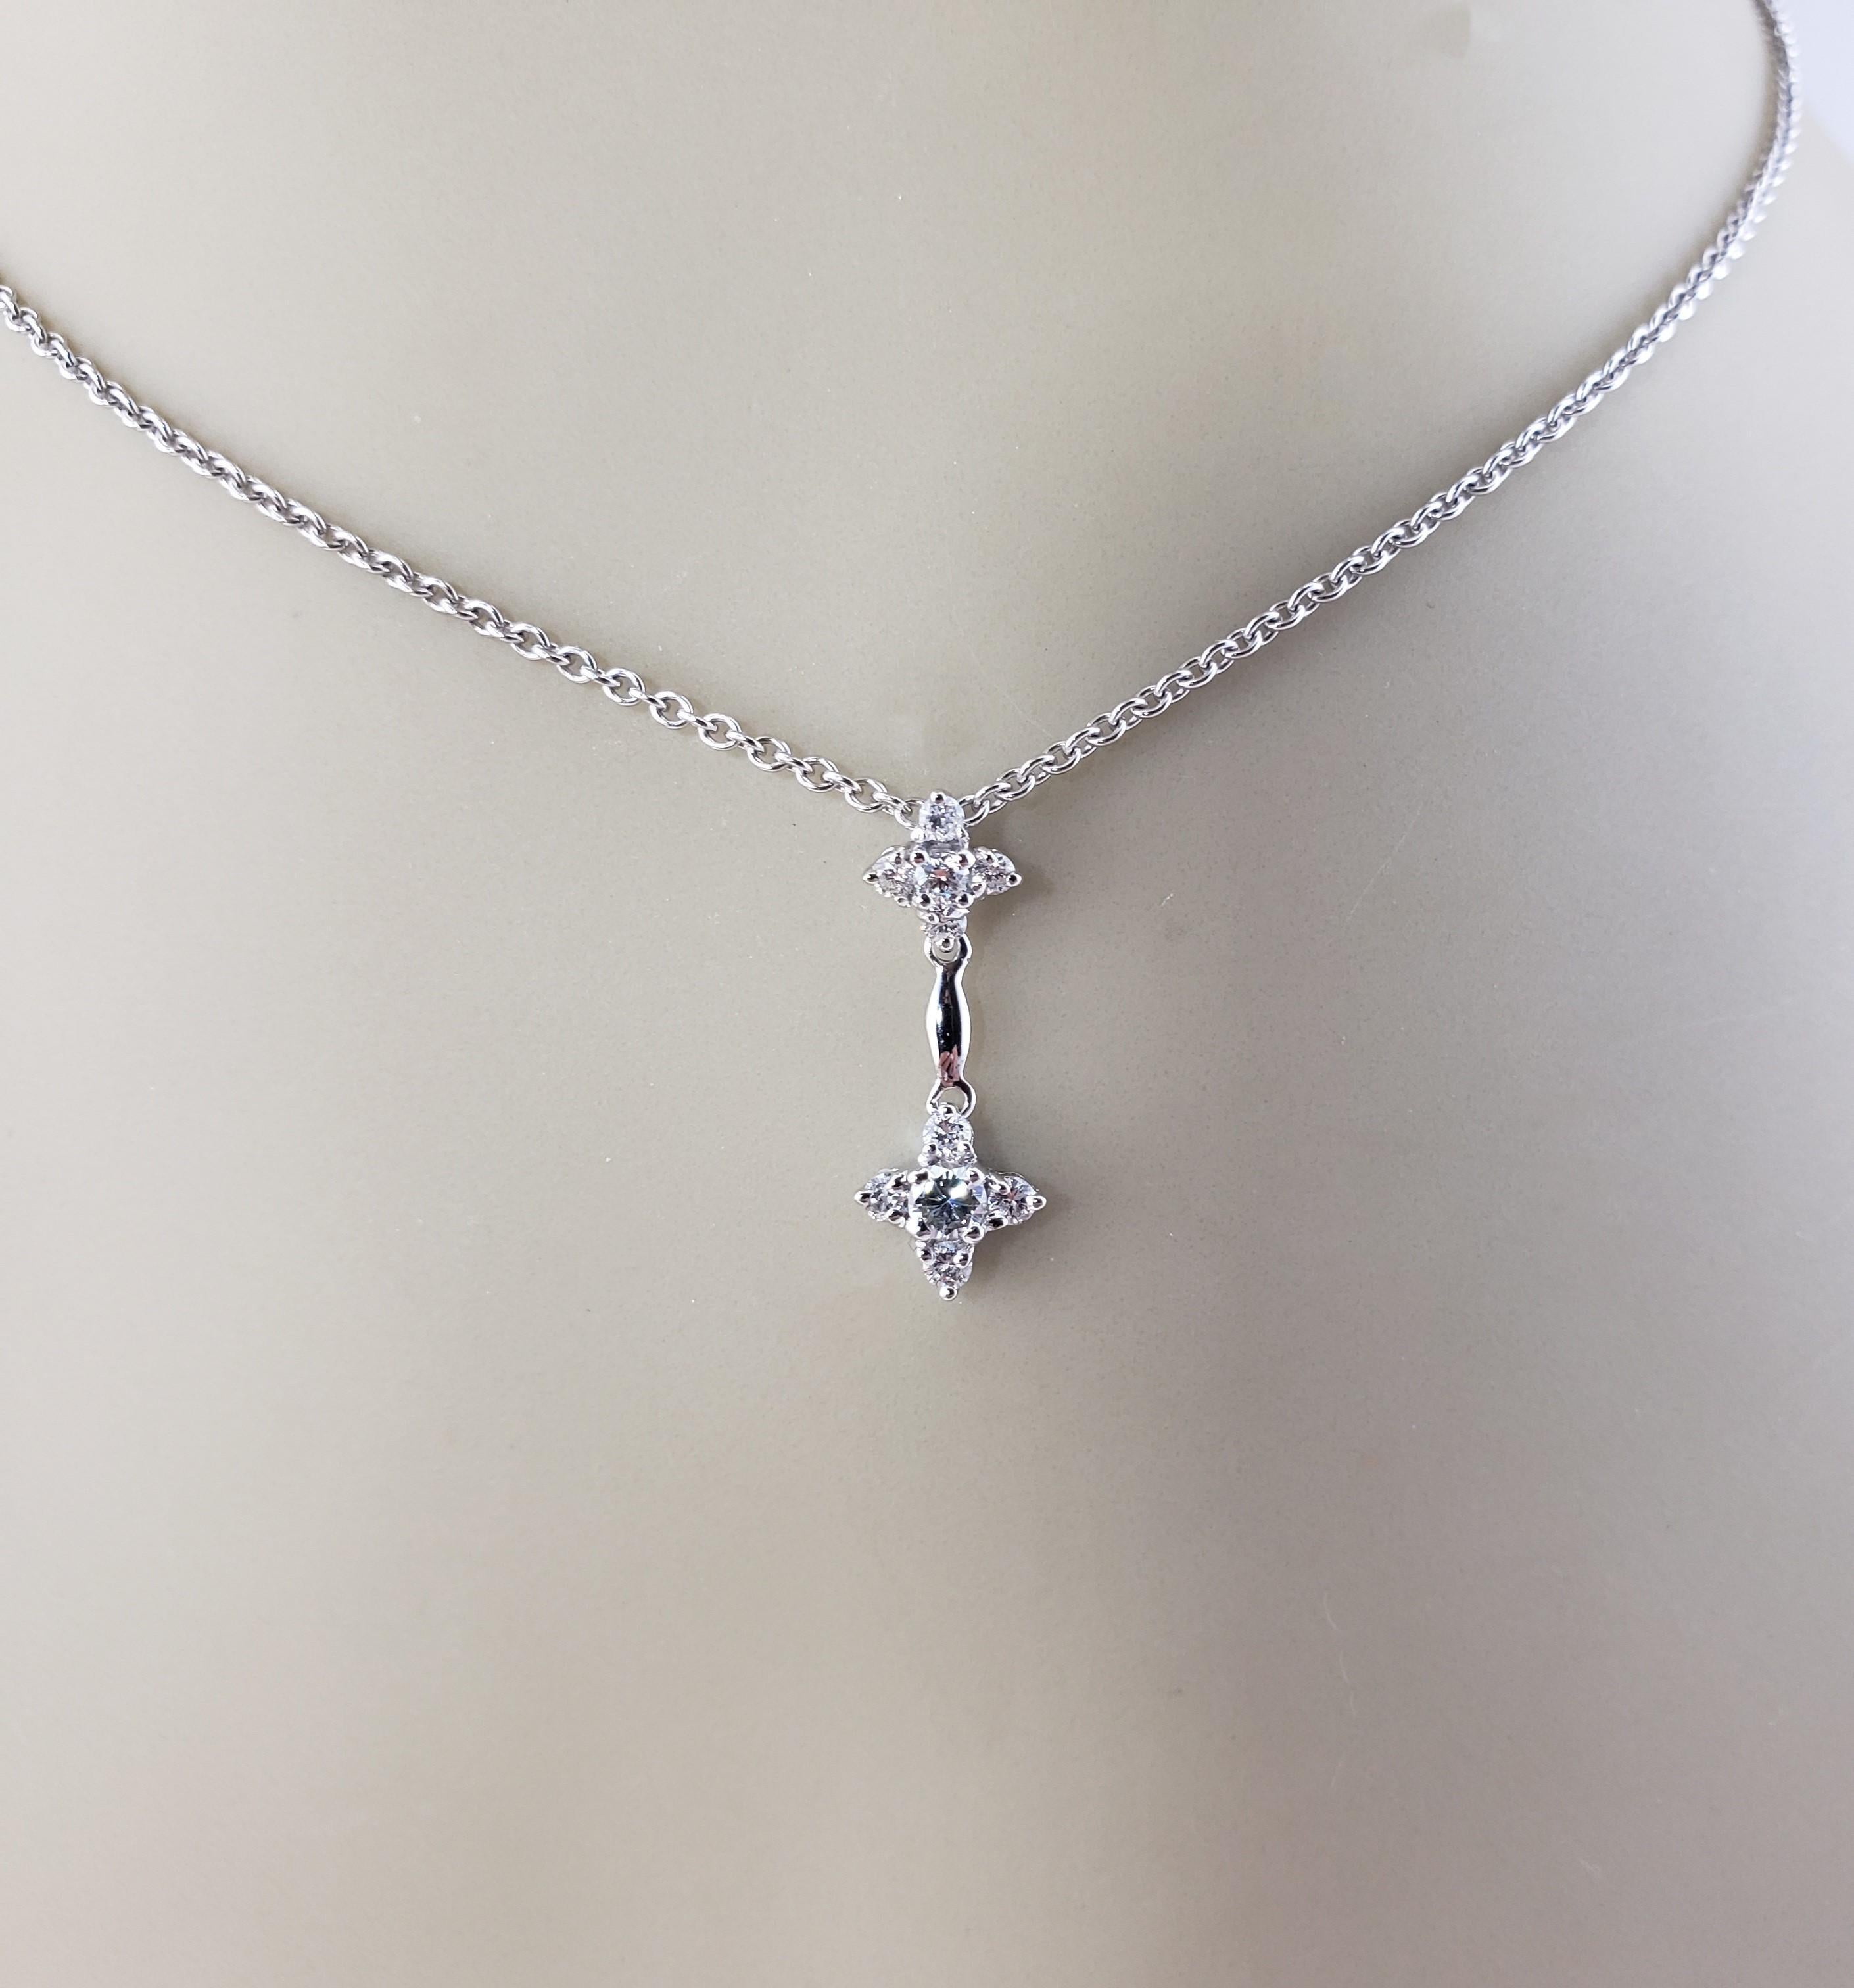  14 Karat White Gold Diamond Pendant Necklace #15501 For Sale 2